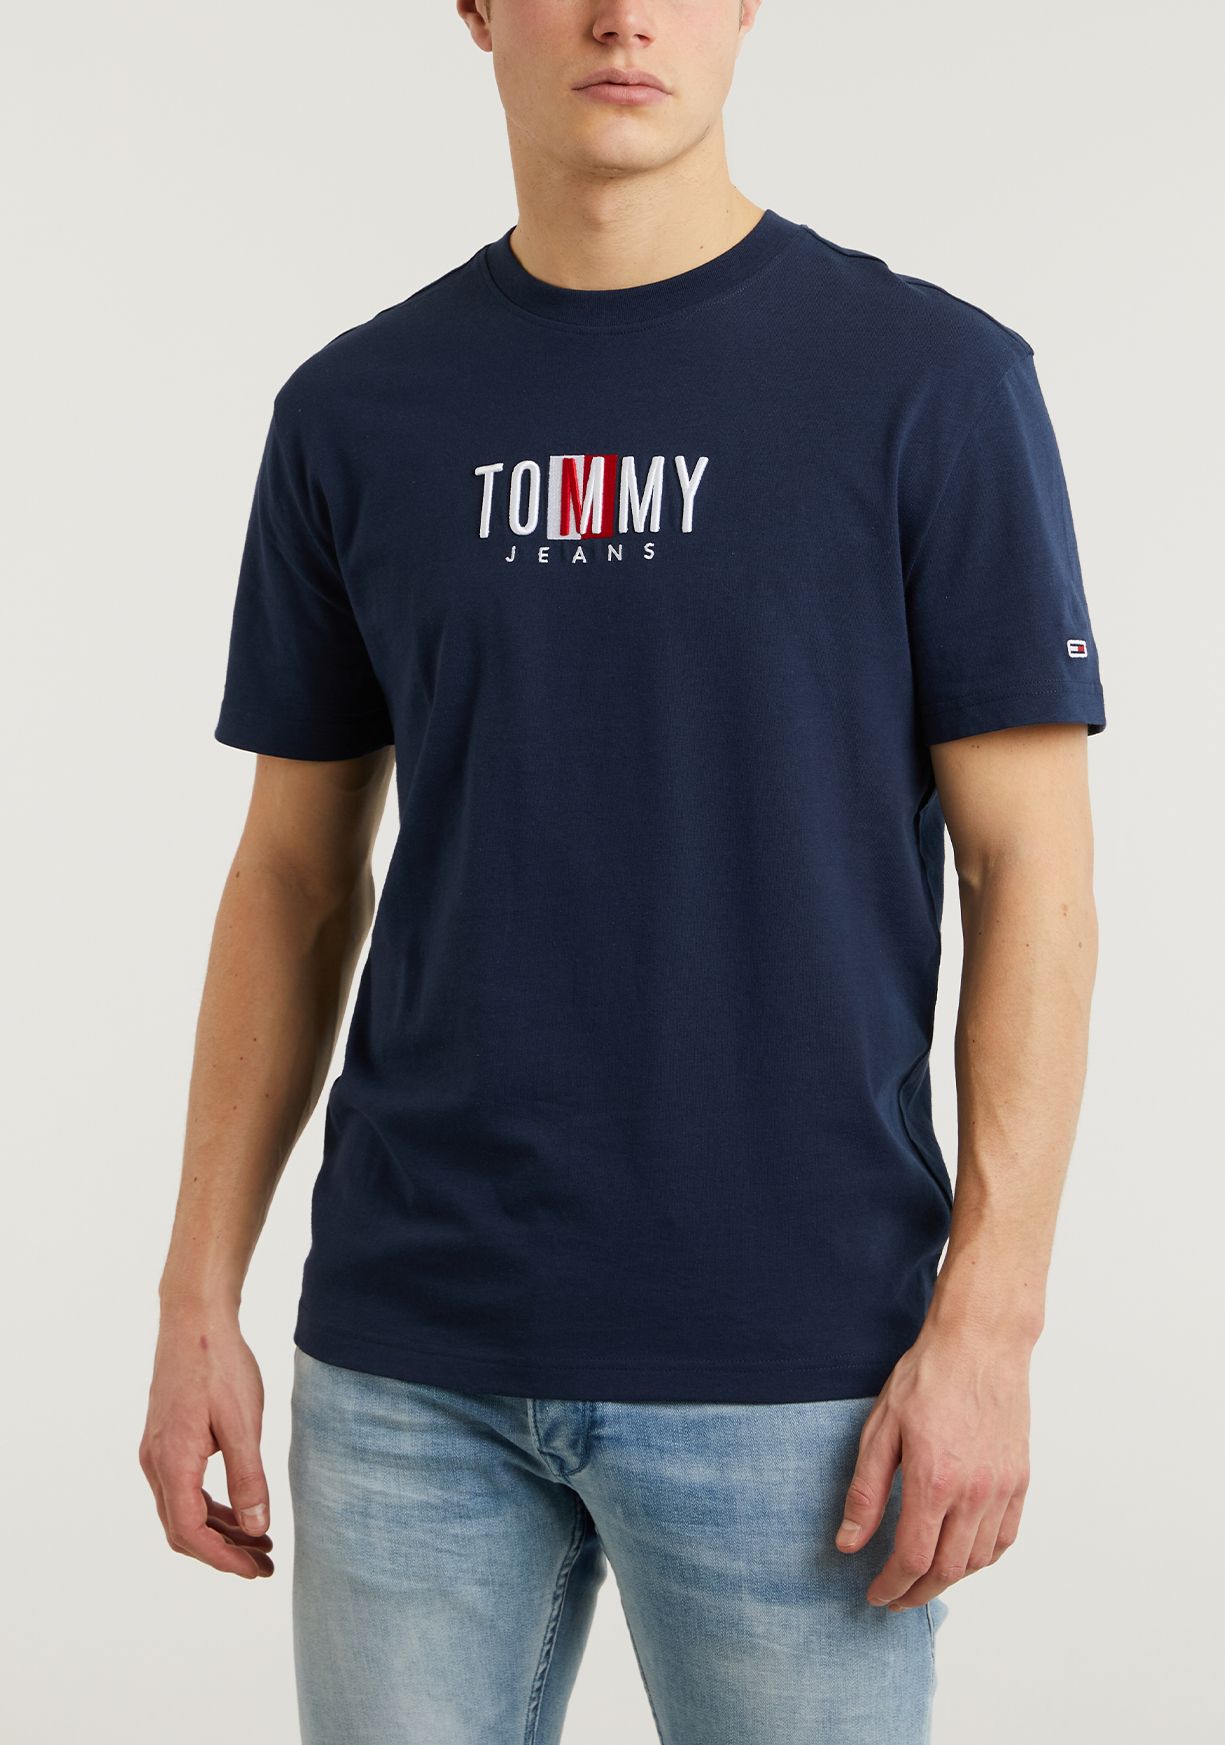 Tommy Jeans TJM TIMELESS BOX TEE T-Shirts - Score